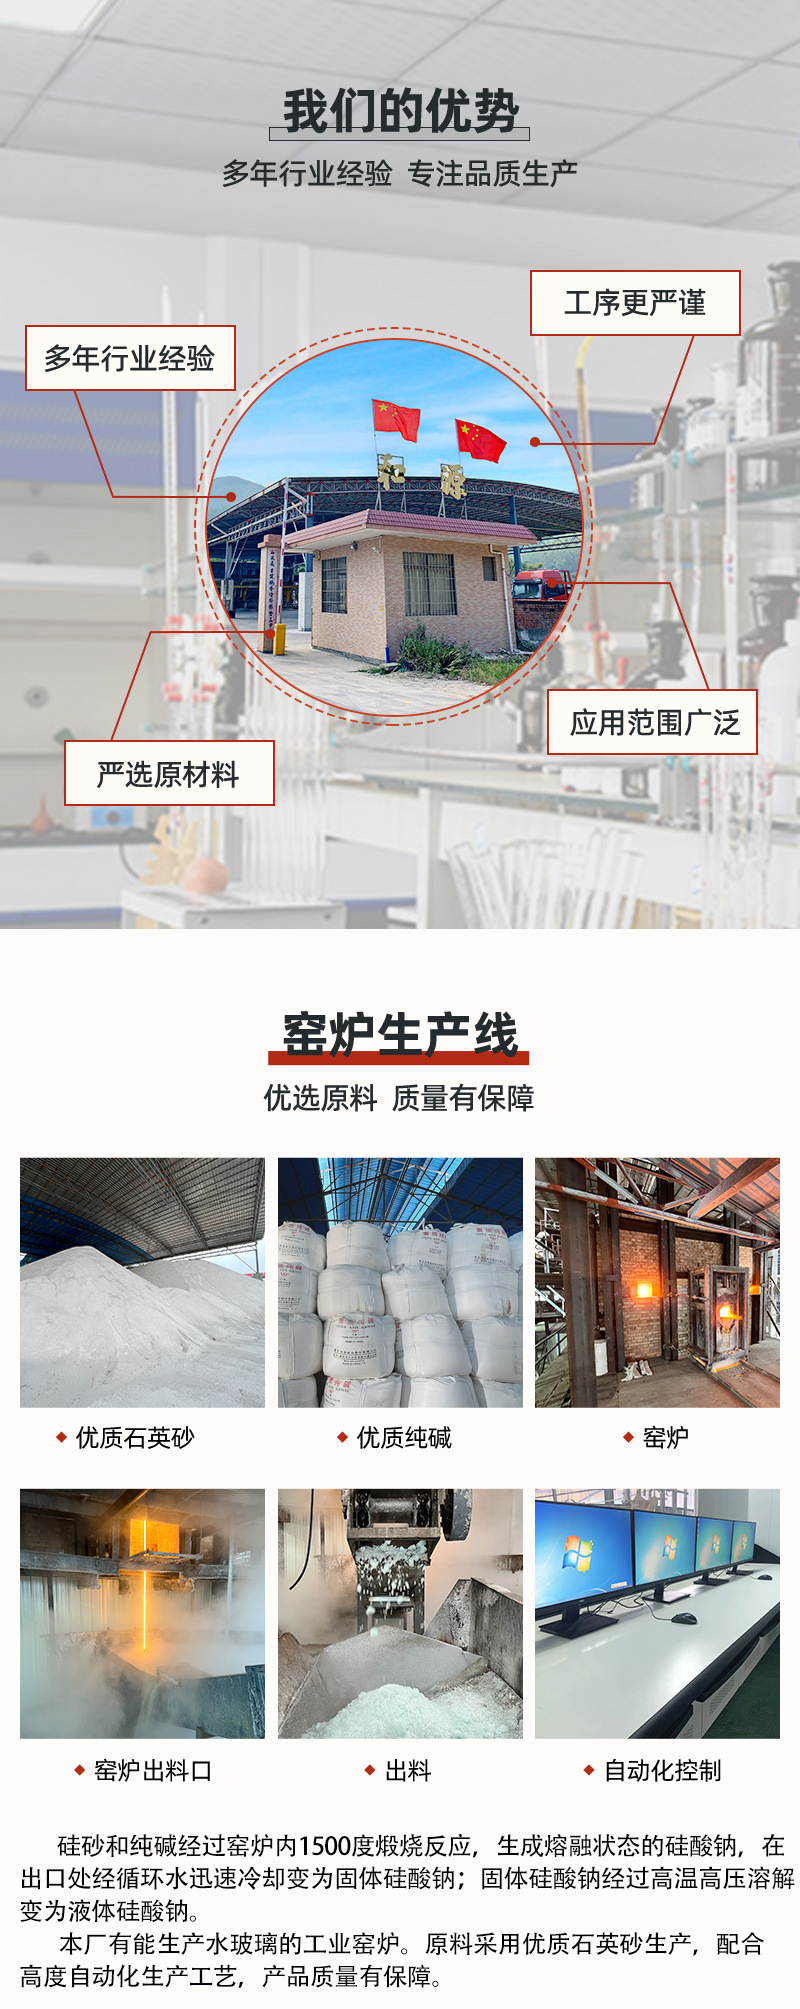 40 ° high clear glass bubble flower alkali liquid Sodium metasilicate acid resistant cement industrial casting barrel manufacturer